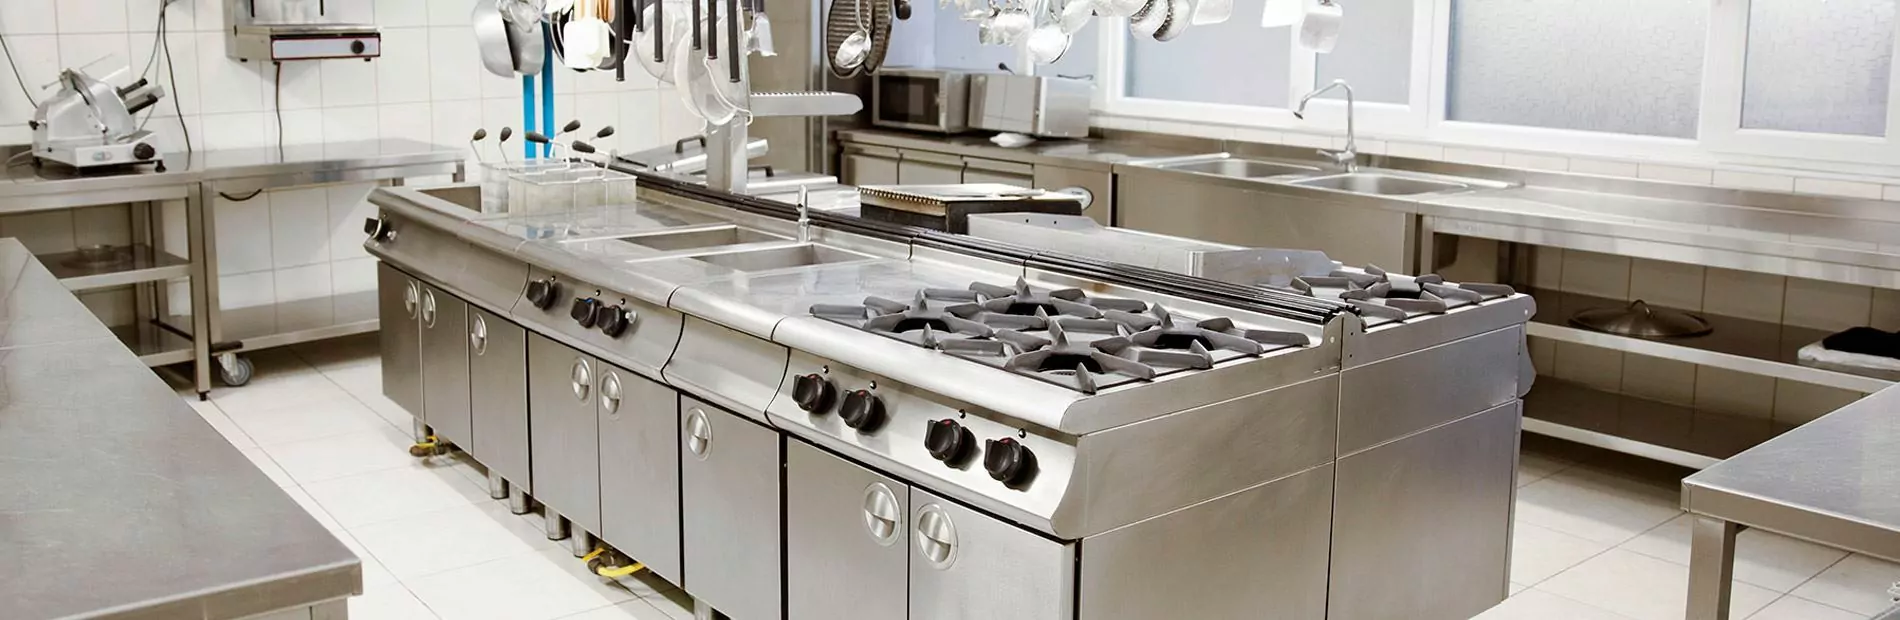 maquinaria para hosteleria equipos para cocinas de hosteleria